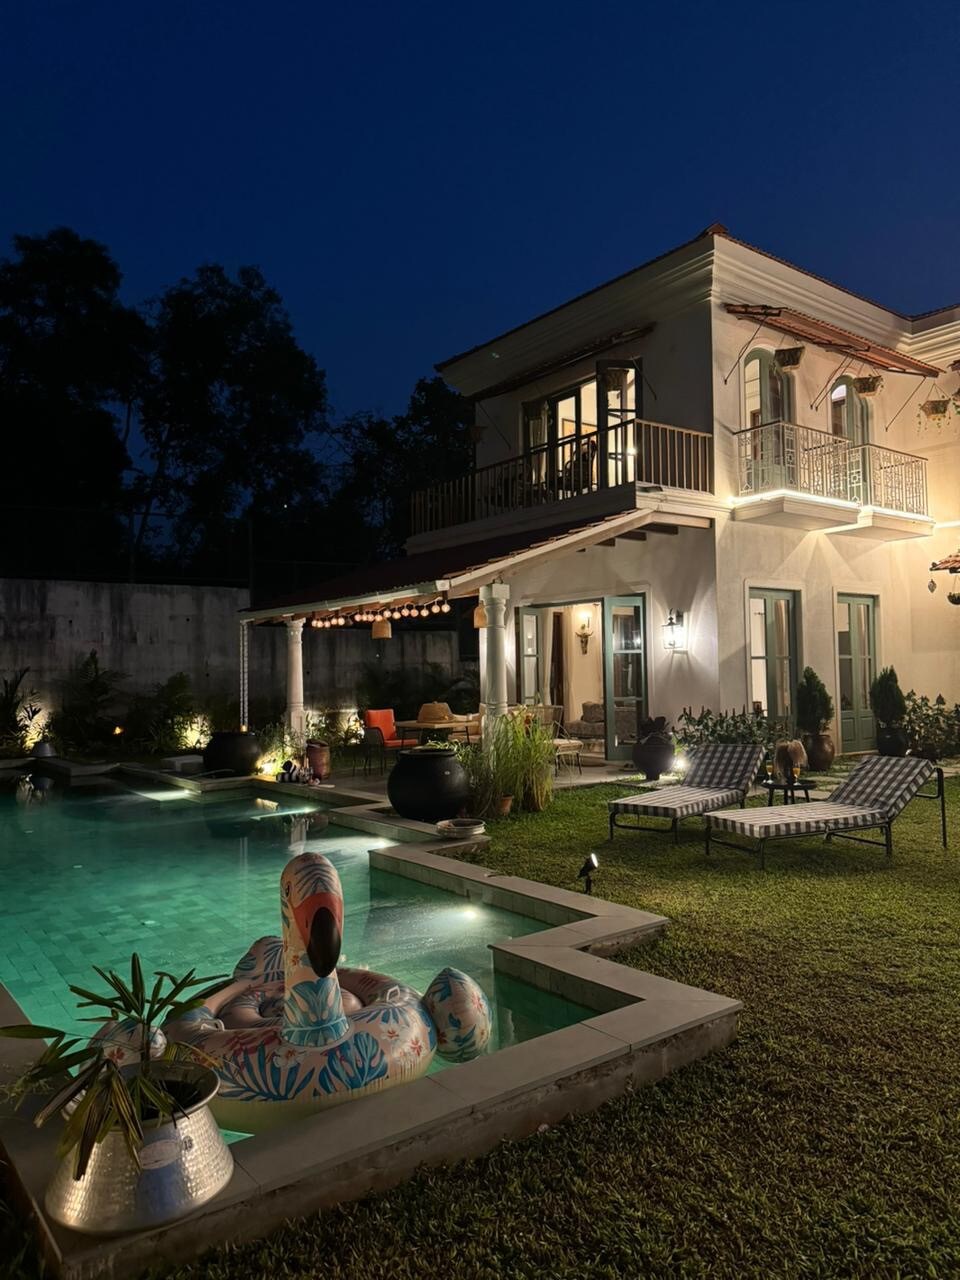 Luxury Assagao 4 bedroom villa with 50ft Pvt pool